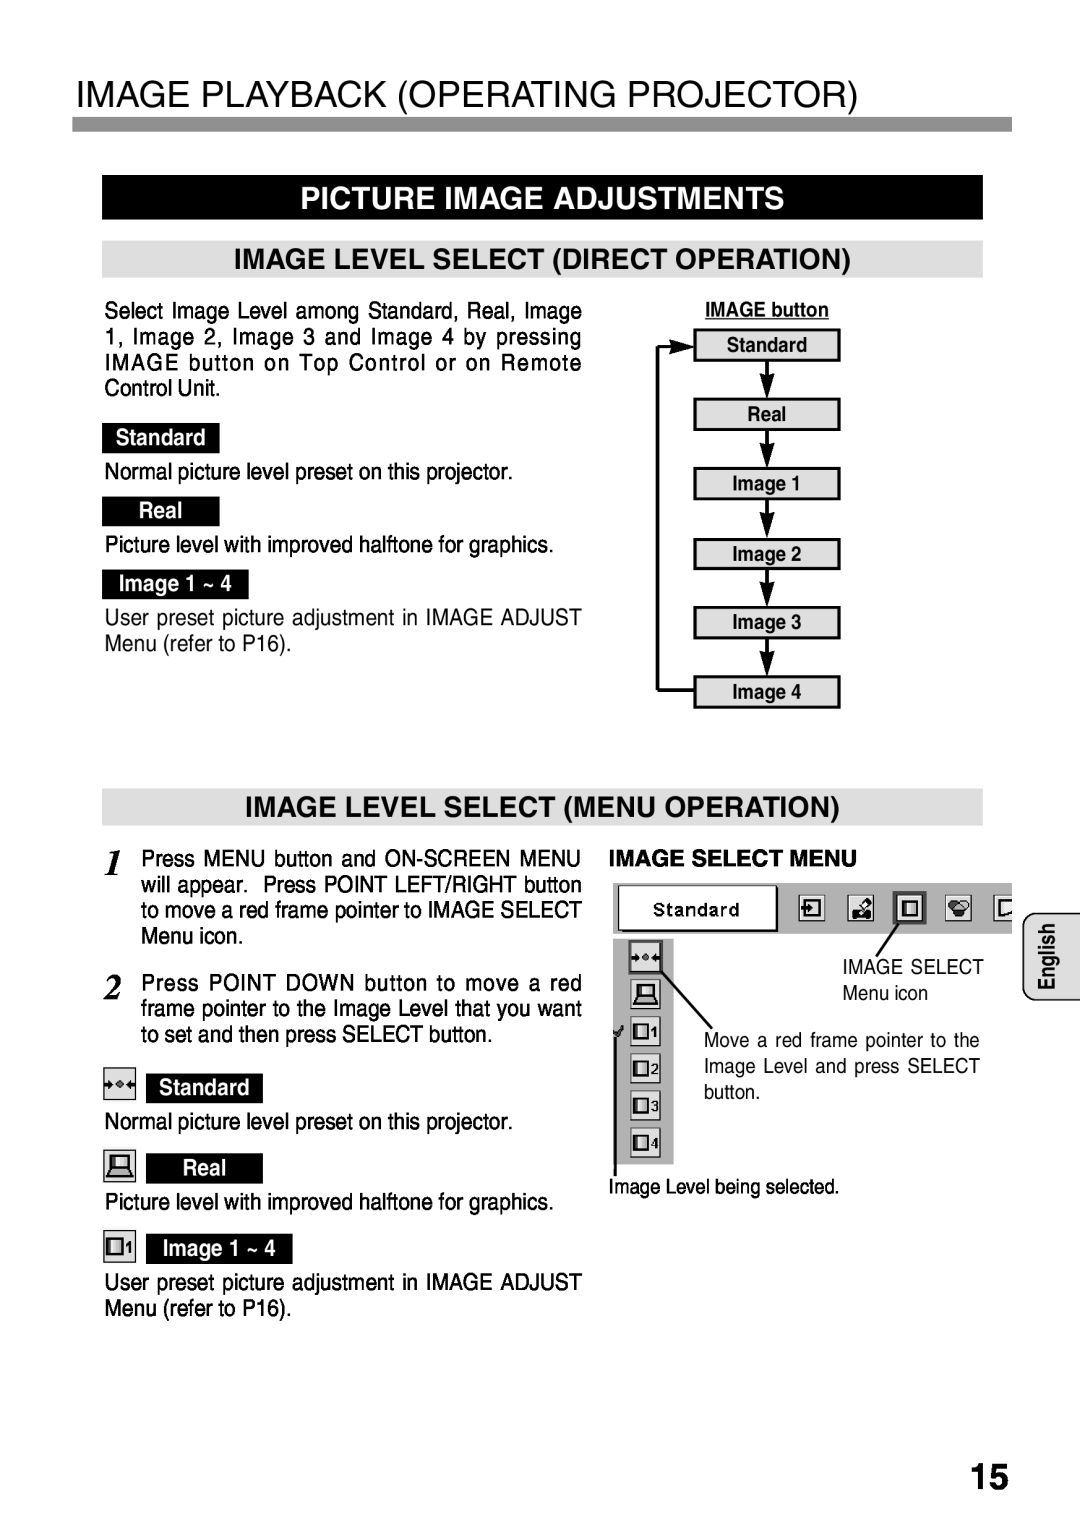 Eiki EVW-100 Picture Image Adjustments, Image Level Select Direct Operation, Image Level Select Menu Operation, Standard 